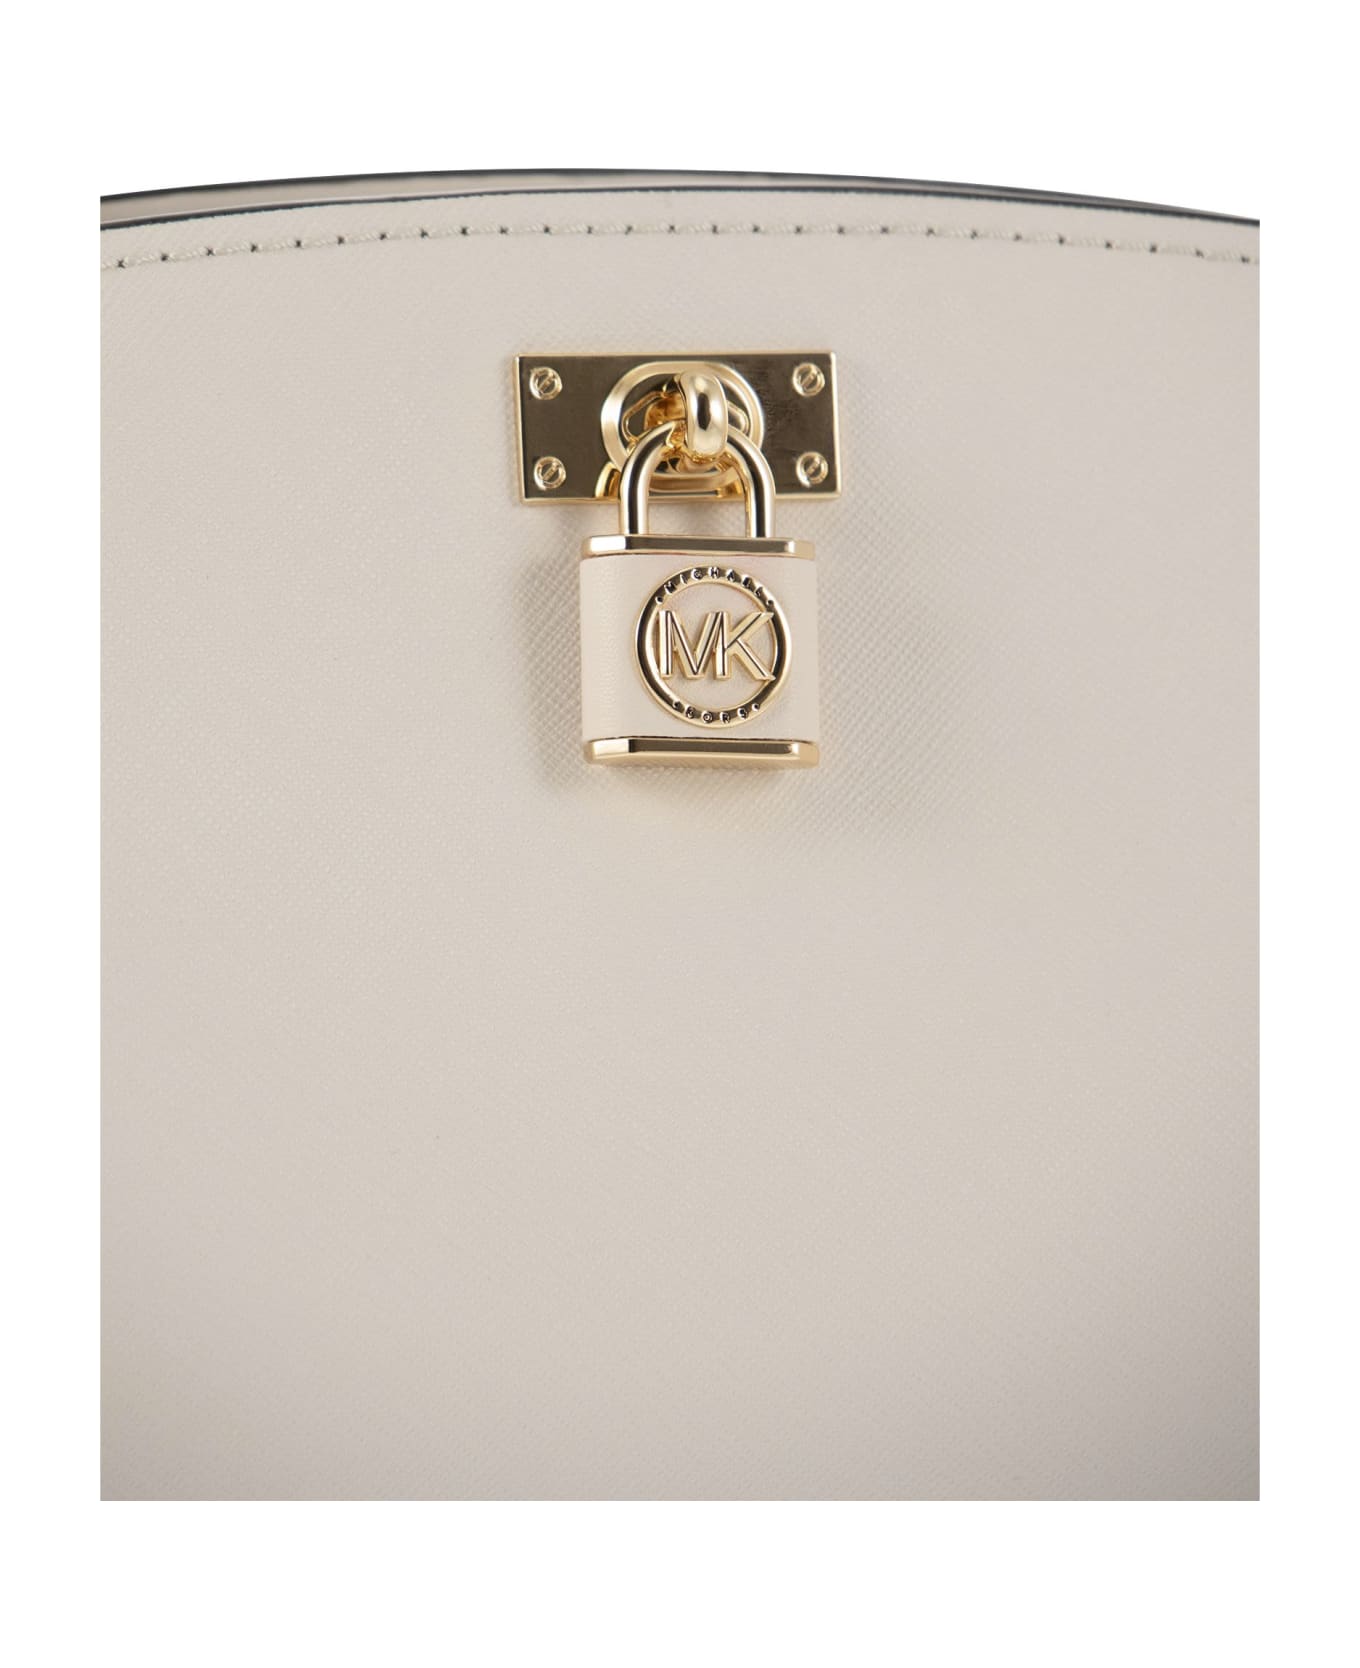 Michael Kors White Leather Ruby Bag - White